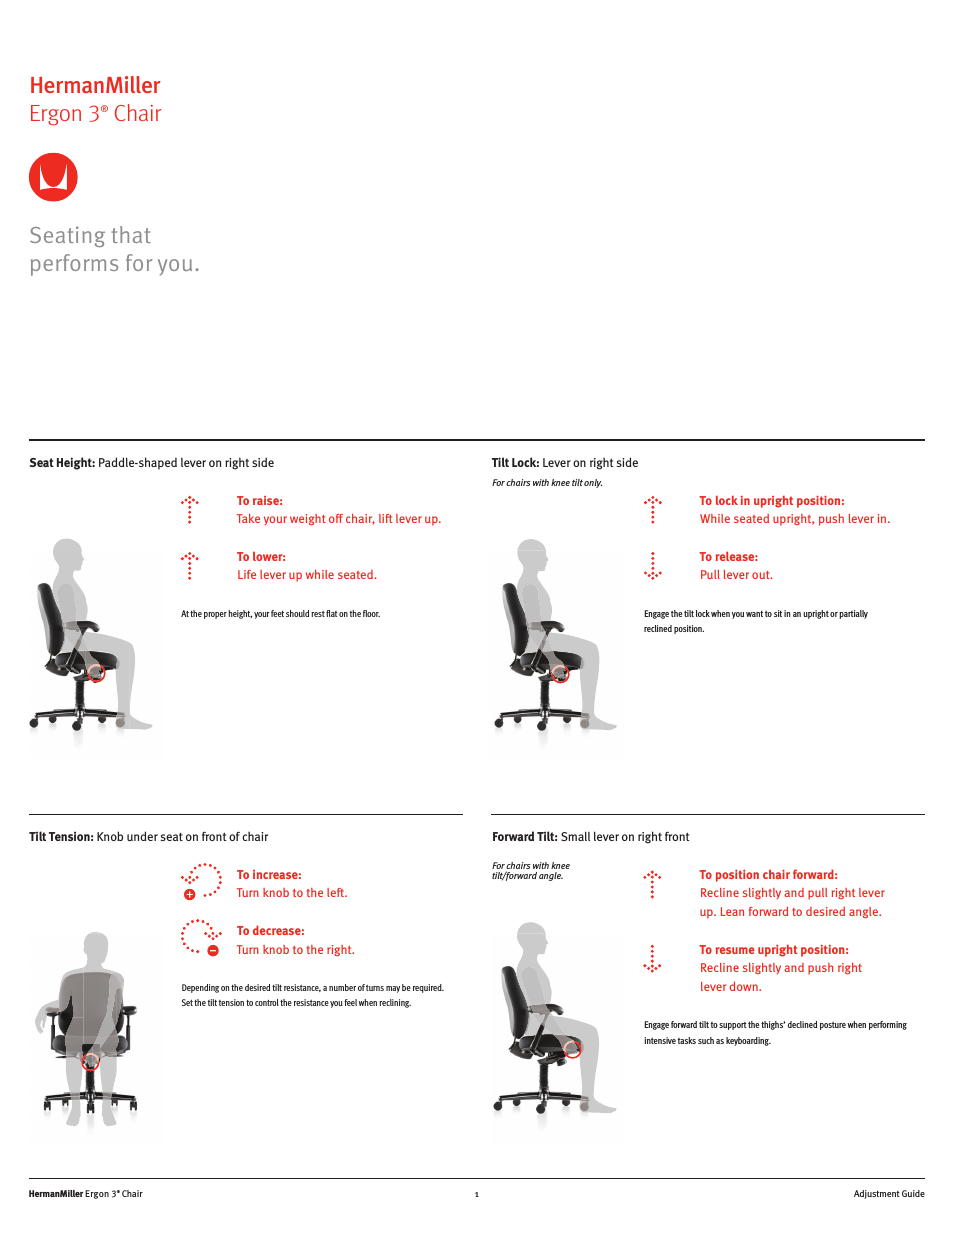 Ergon 3 Chairs - User Adjustments